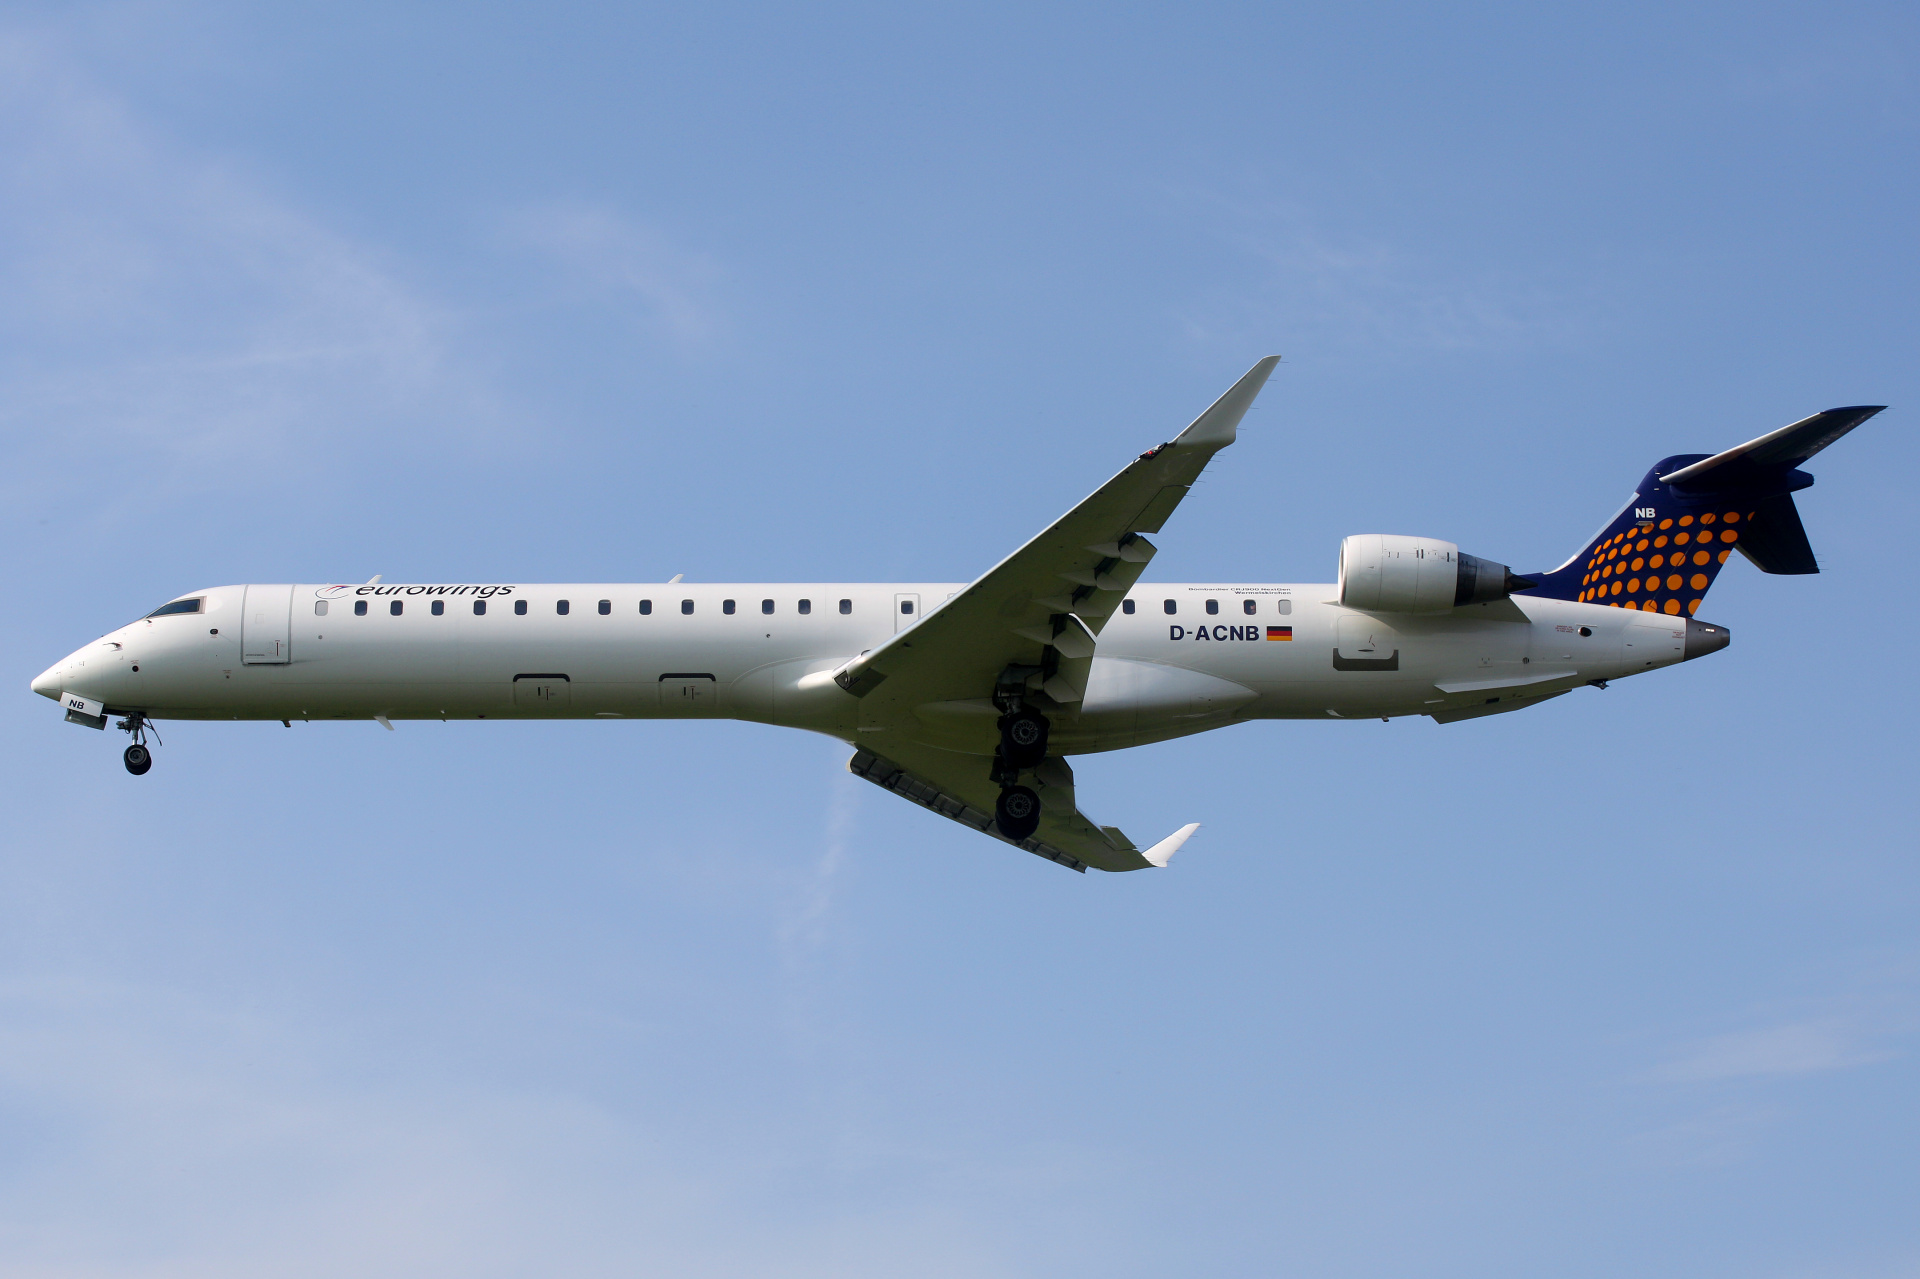 D-ACNB, Eurowings (Aircraft » EPWA Spotting » Mitsubishi Regional Jet » CRJ-900 » Eurowings)